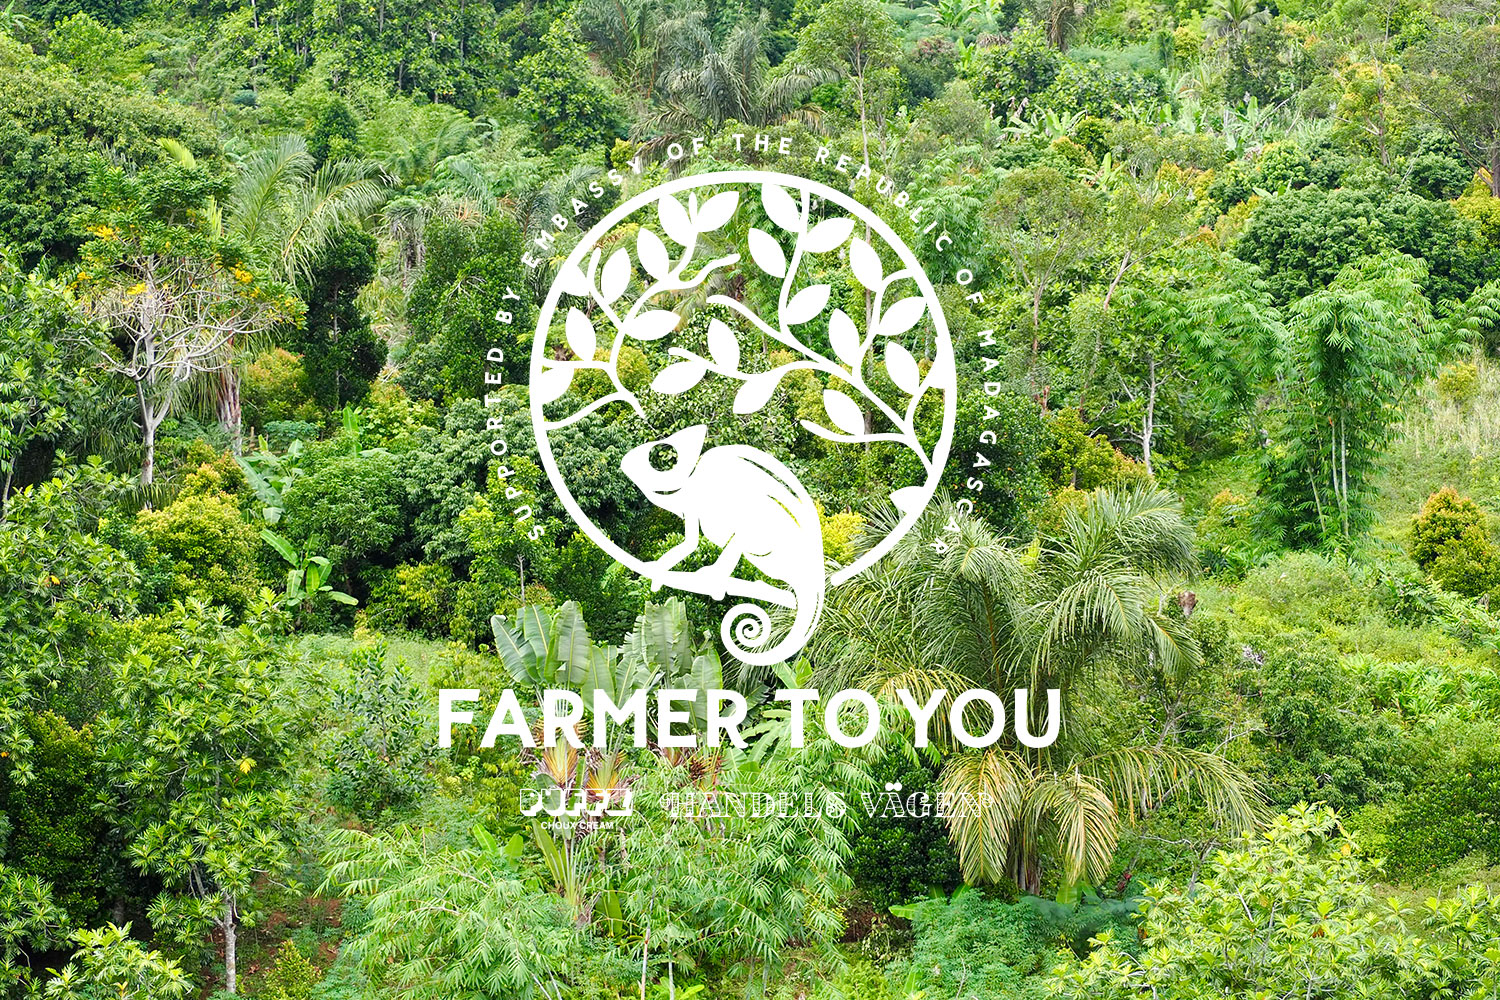 『FARMER TO YOU』企画の目的は、マダガスカルのバニラを通じて生産者と消費者をつなぐこと。森林破壊などの問題が解決しないのは、消費者から生産者への関心が足りないことが一因だとも言われています。